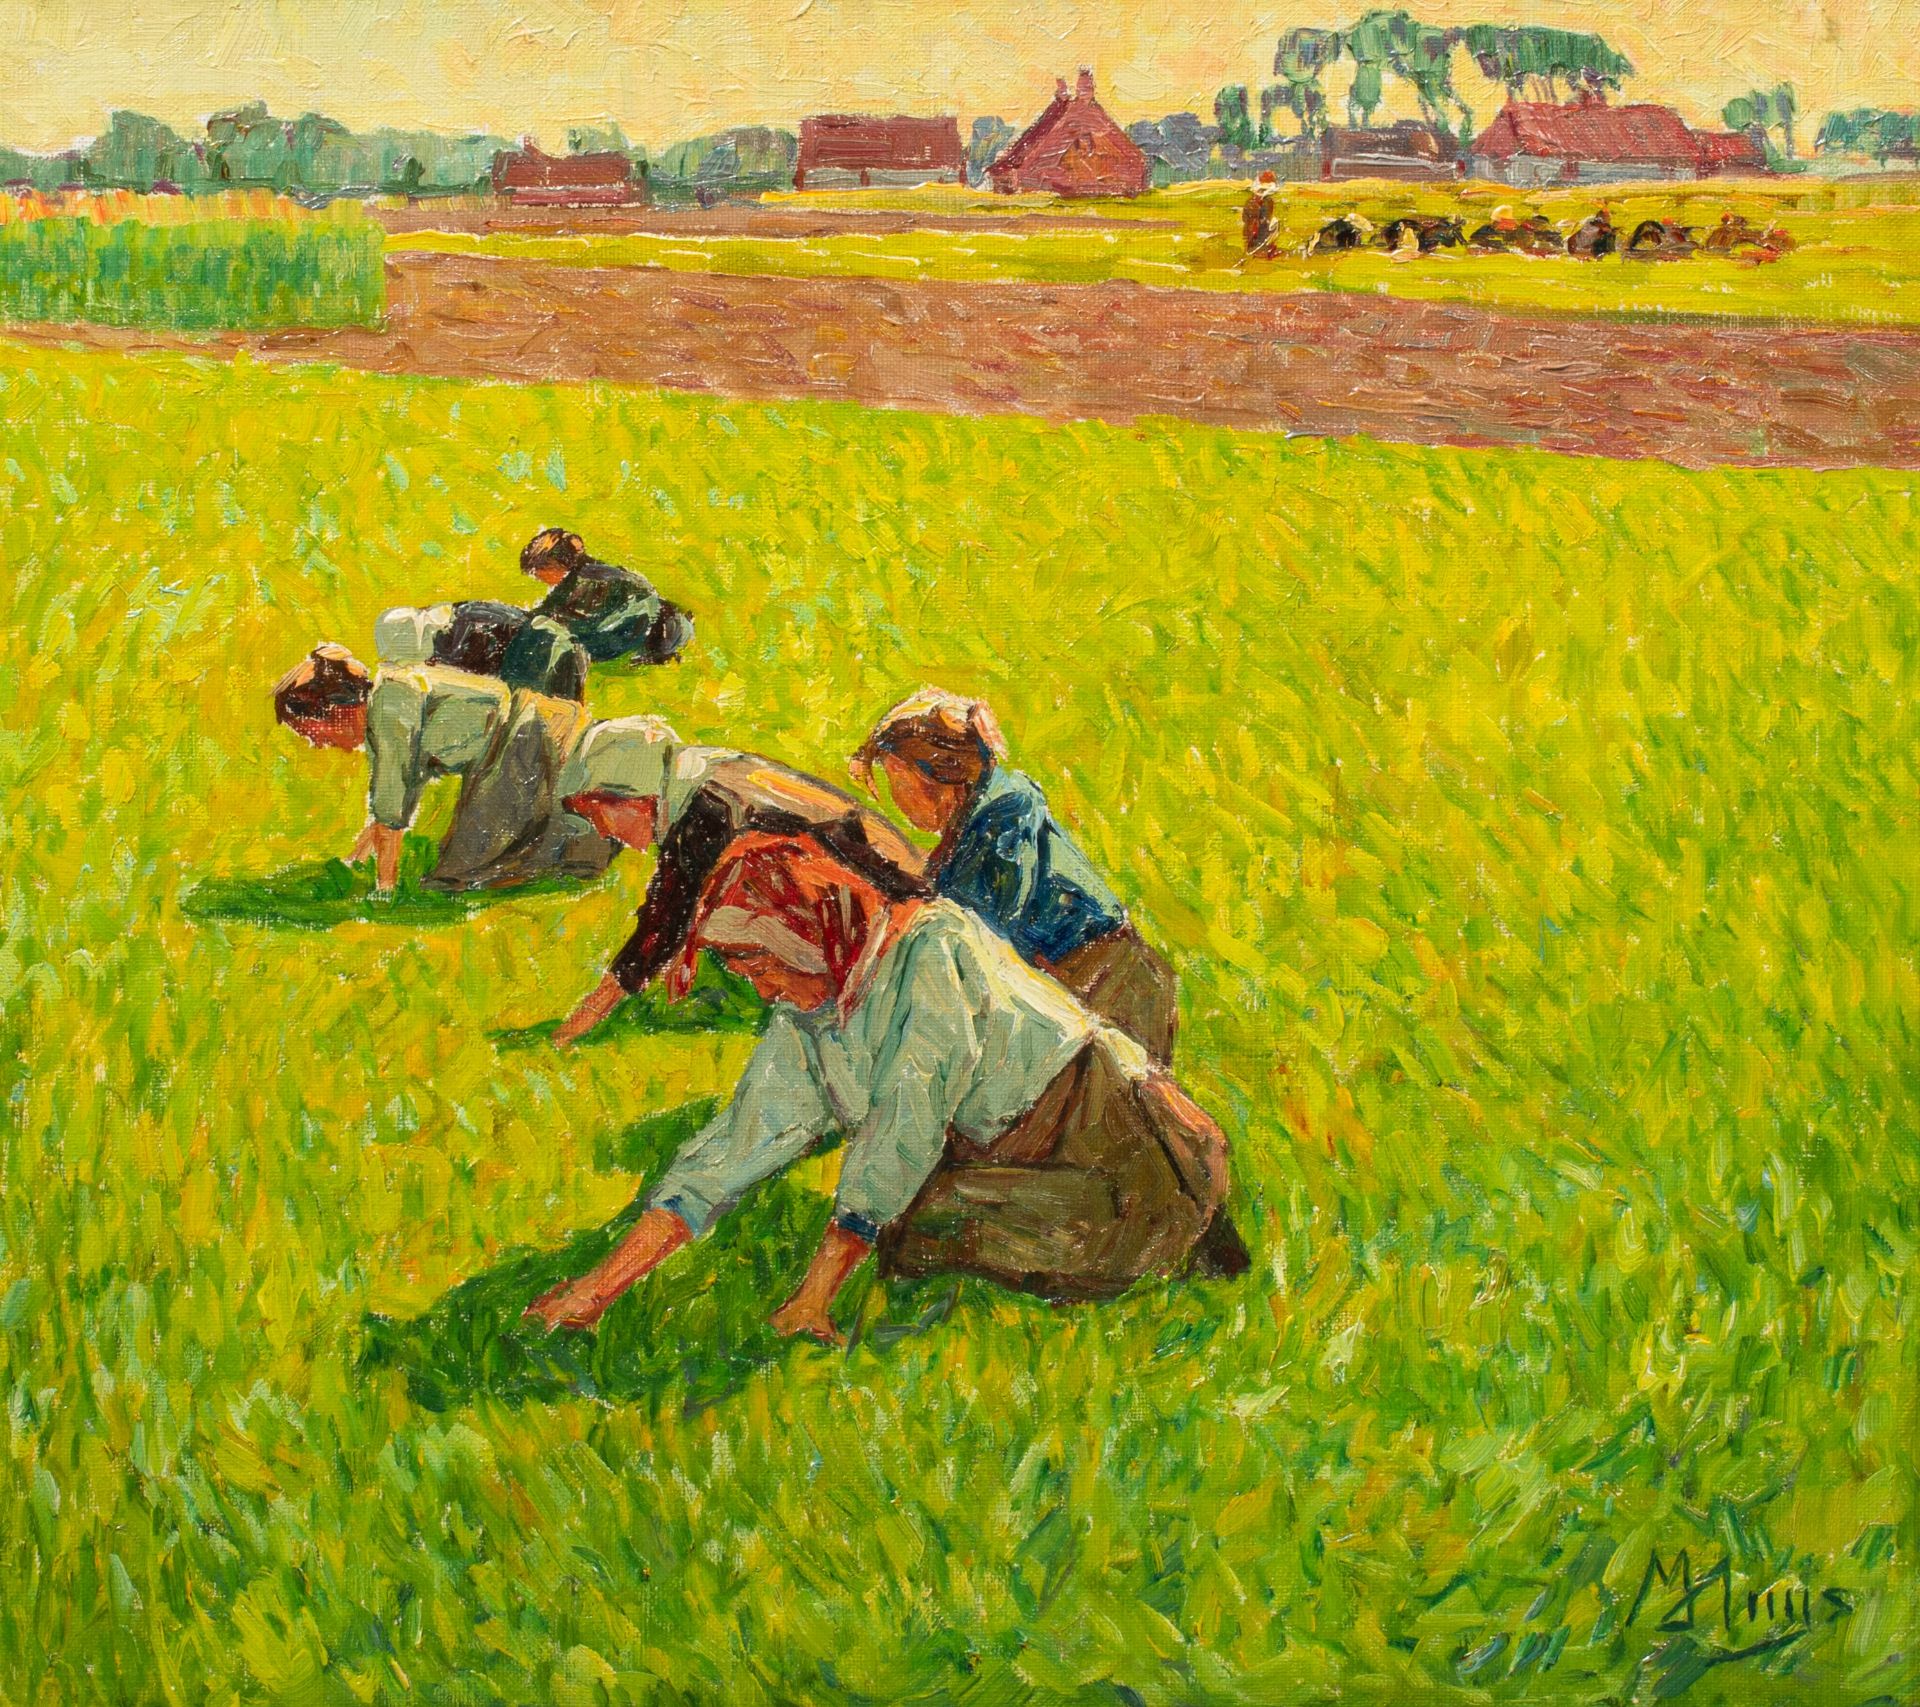 Modest Huys (1874-1932), 'De Vlaswiedsters No III, Wacken', 1924, oil on canvas, 45 x 50,5 cm